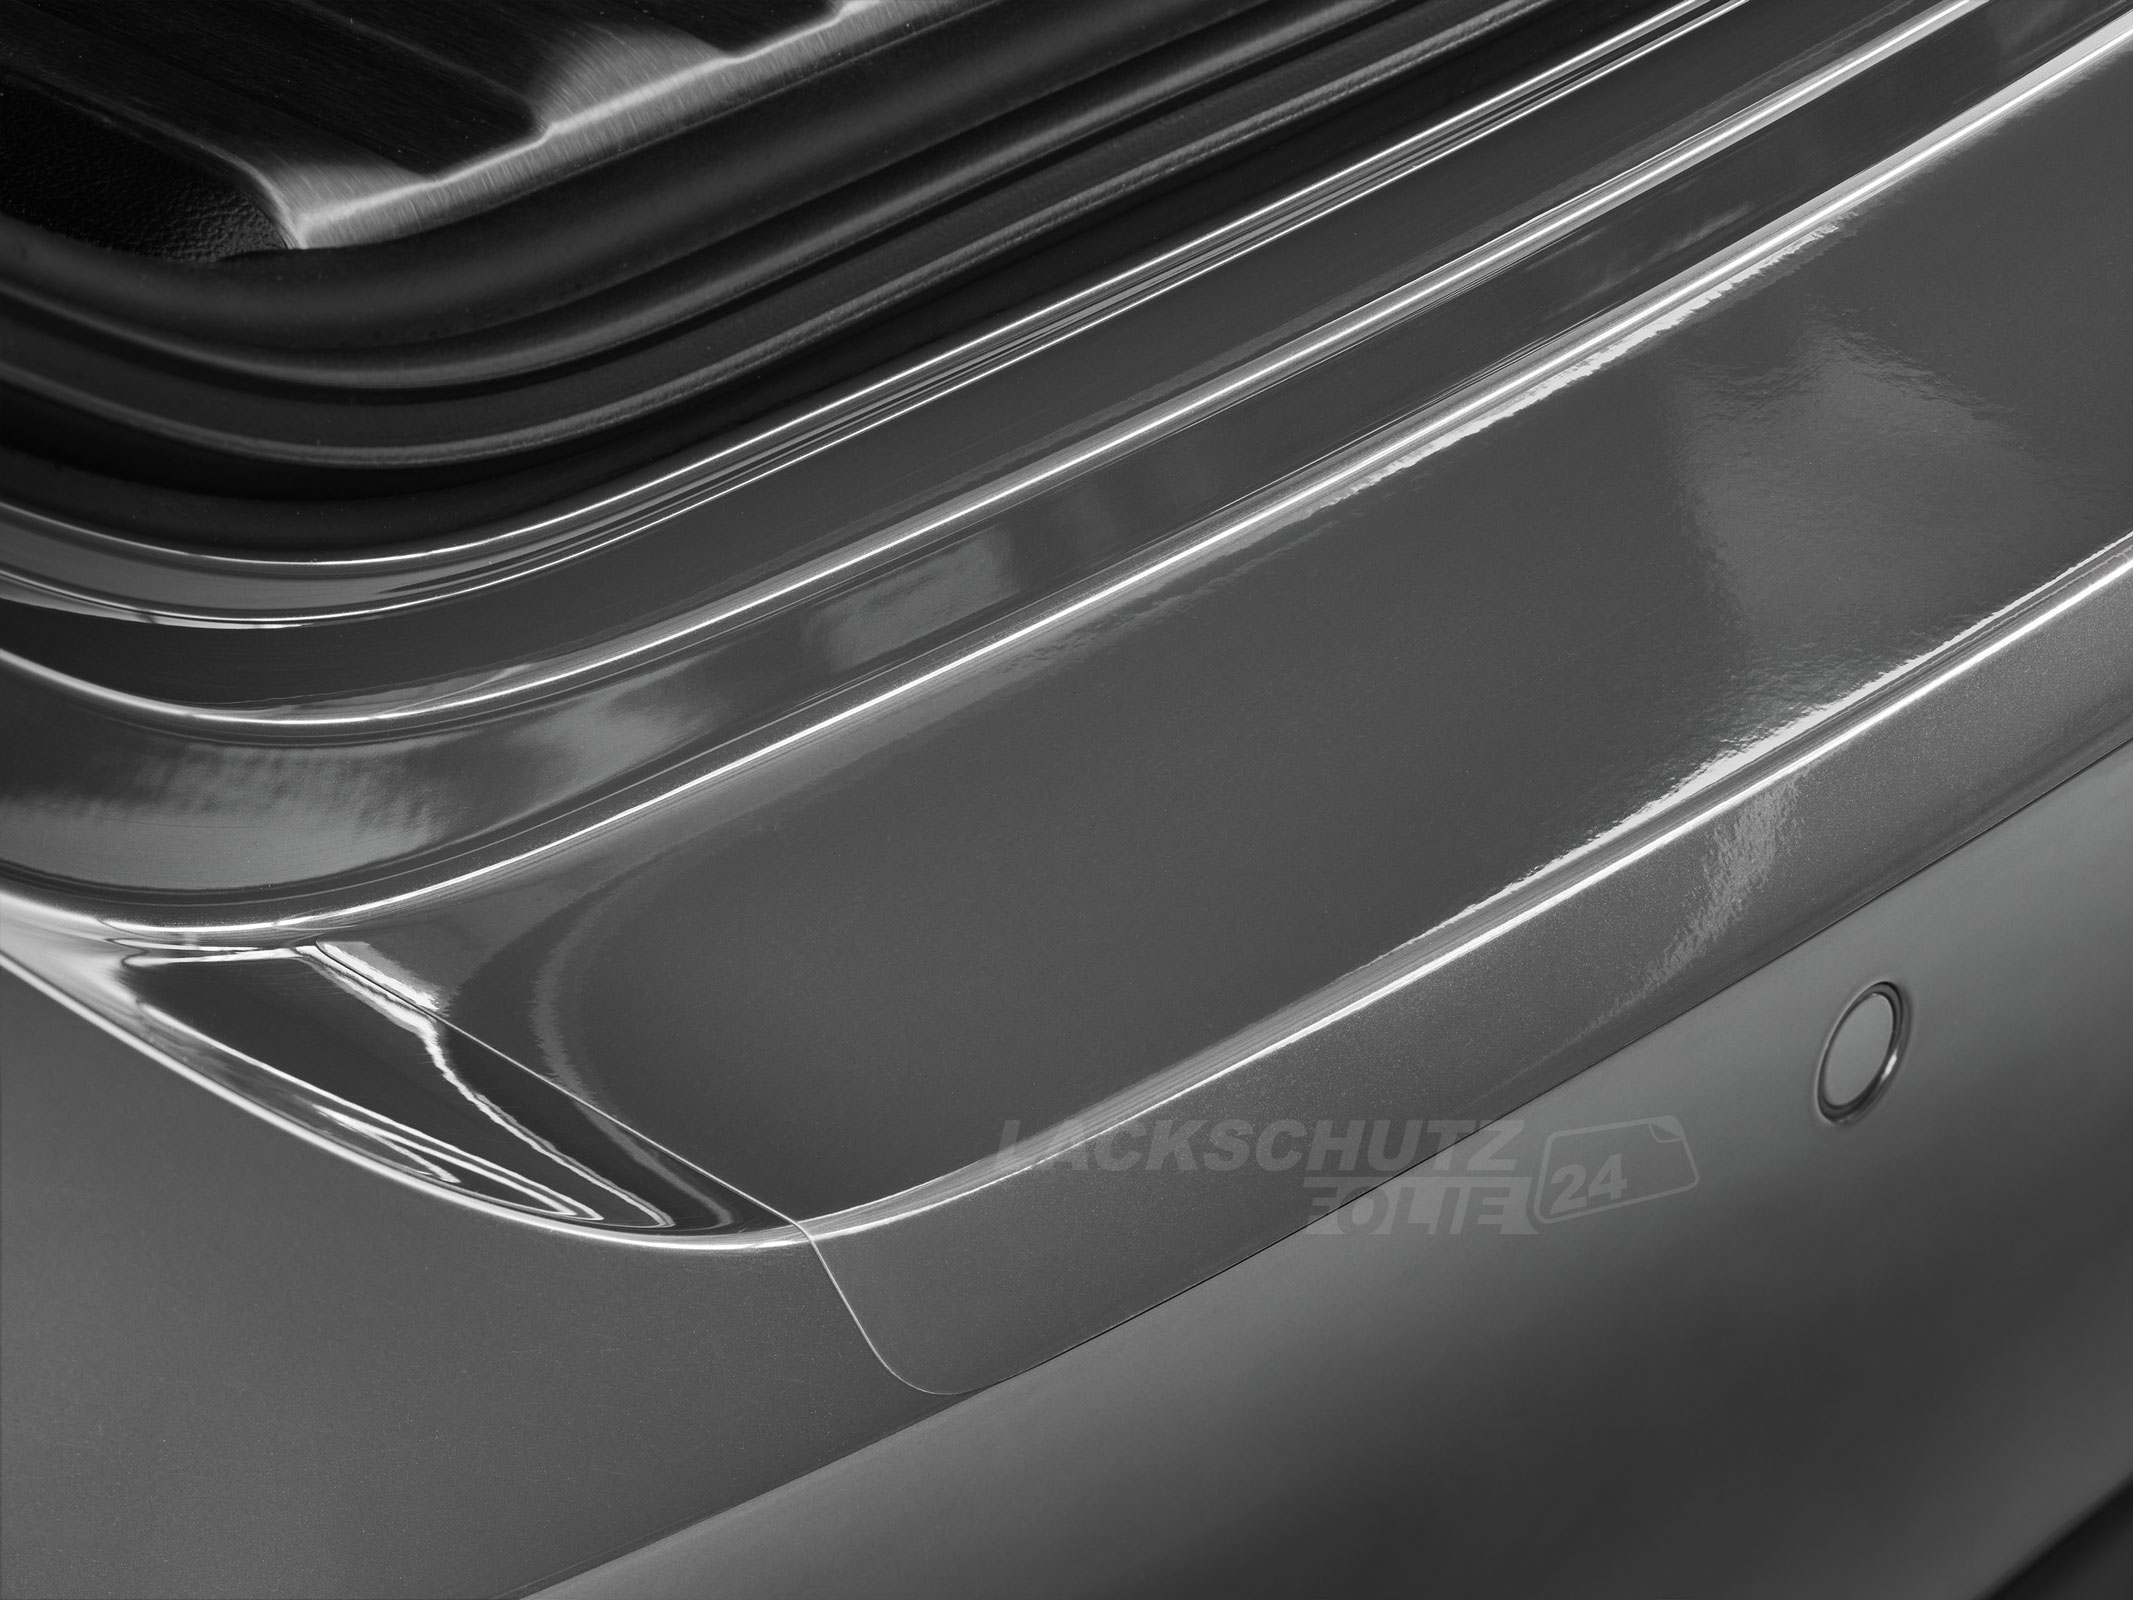 Ladekantenschutzfolie - Transparent Glatt Hochglänzend 240 µm stark für Renault Laguna Grandtour (Kombi) (III) Typ T, BJ 04/2008-2015